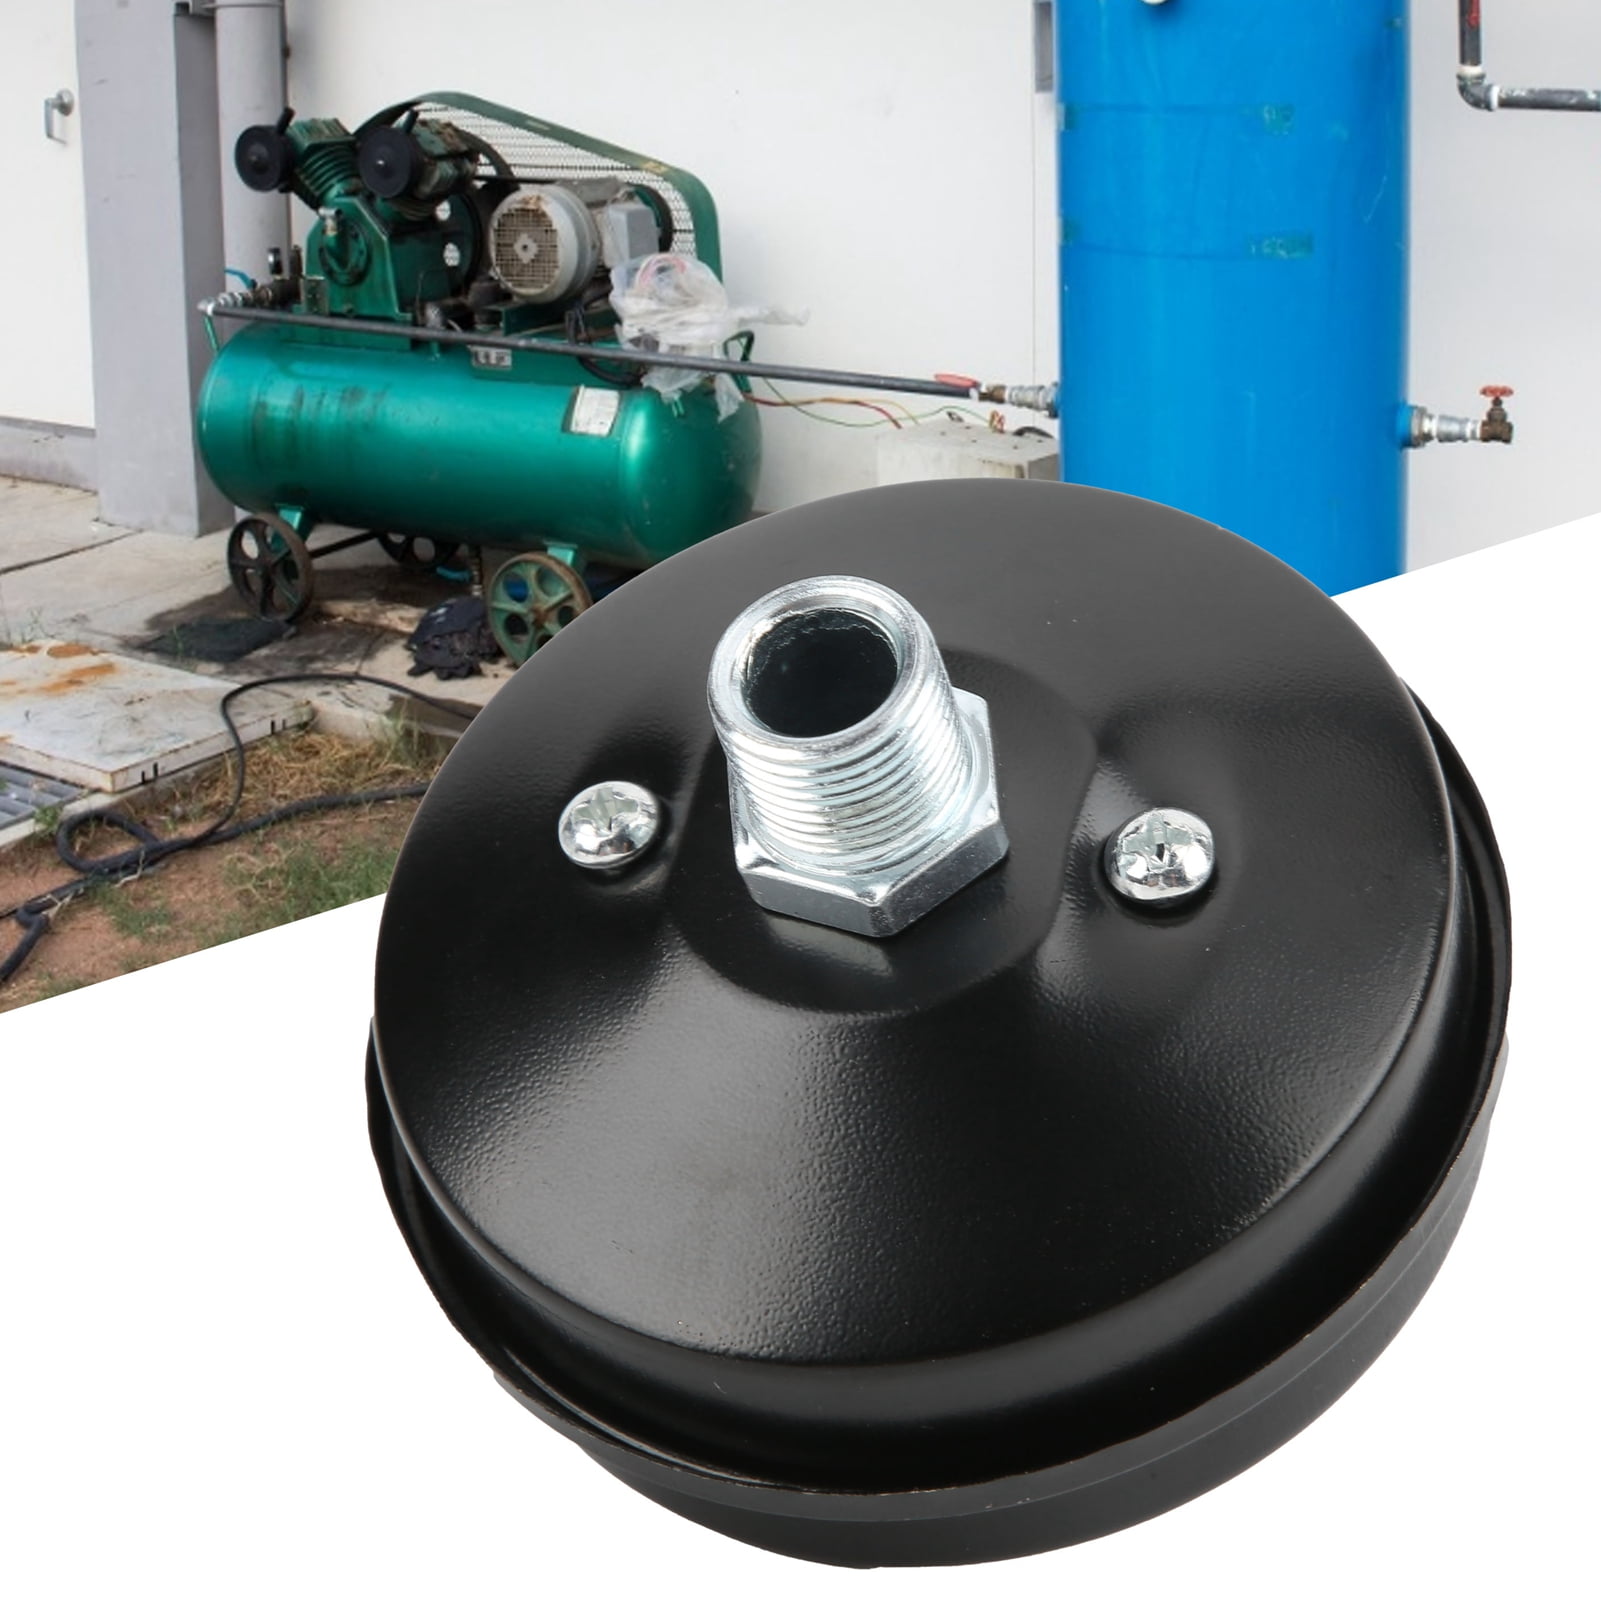 Details about   Air Compressor Silencer Muffler Iron Shell Intake Filter Pump Part Multisize New 